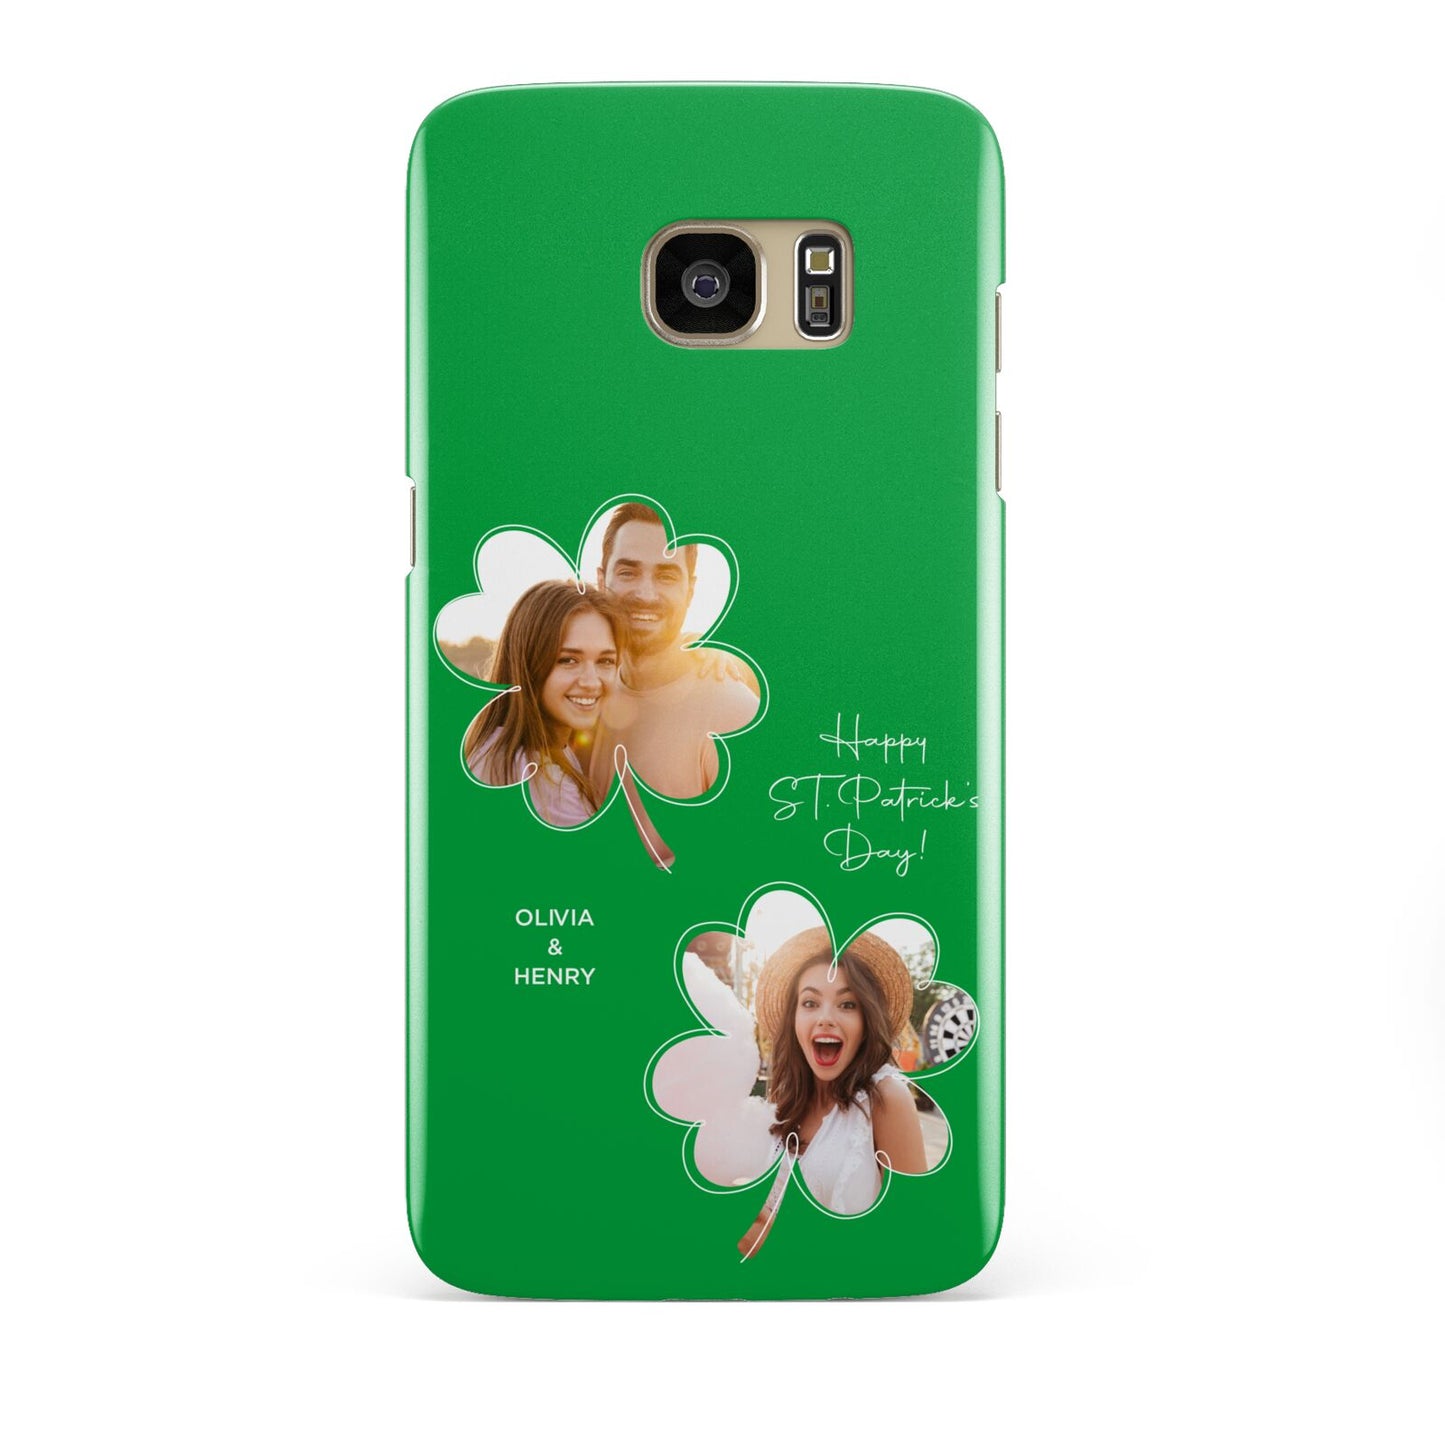 Personalised Photo St Patricks Day Samsung Galaxy S7 Edge Case